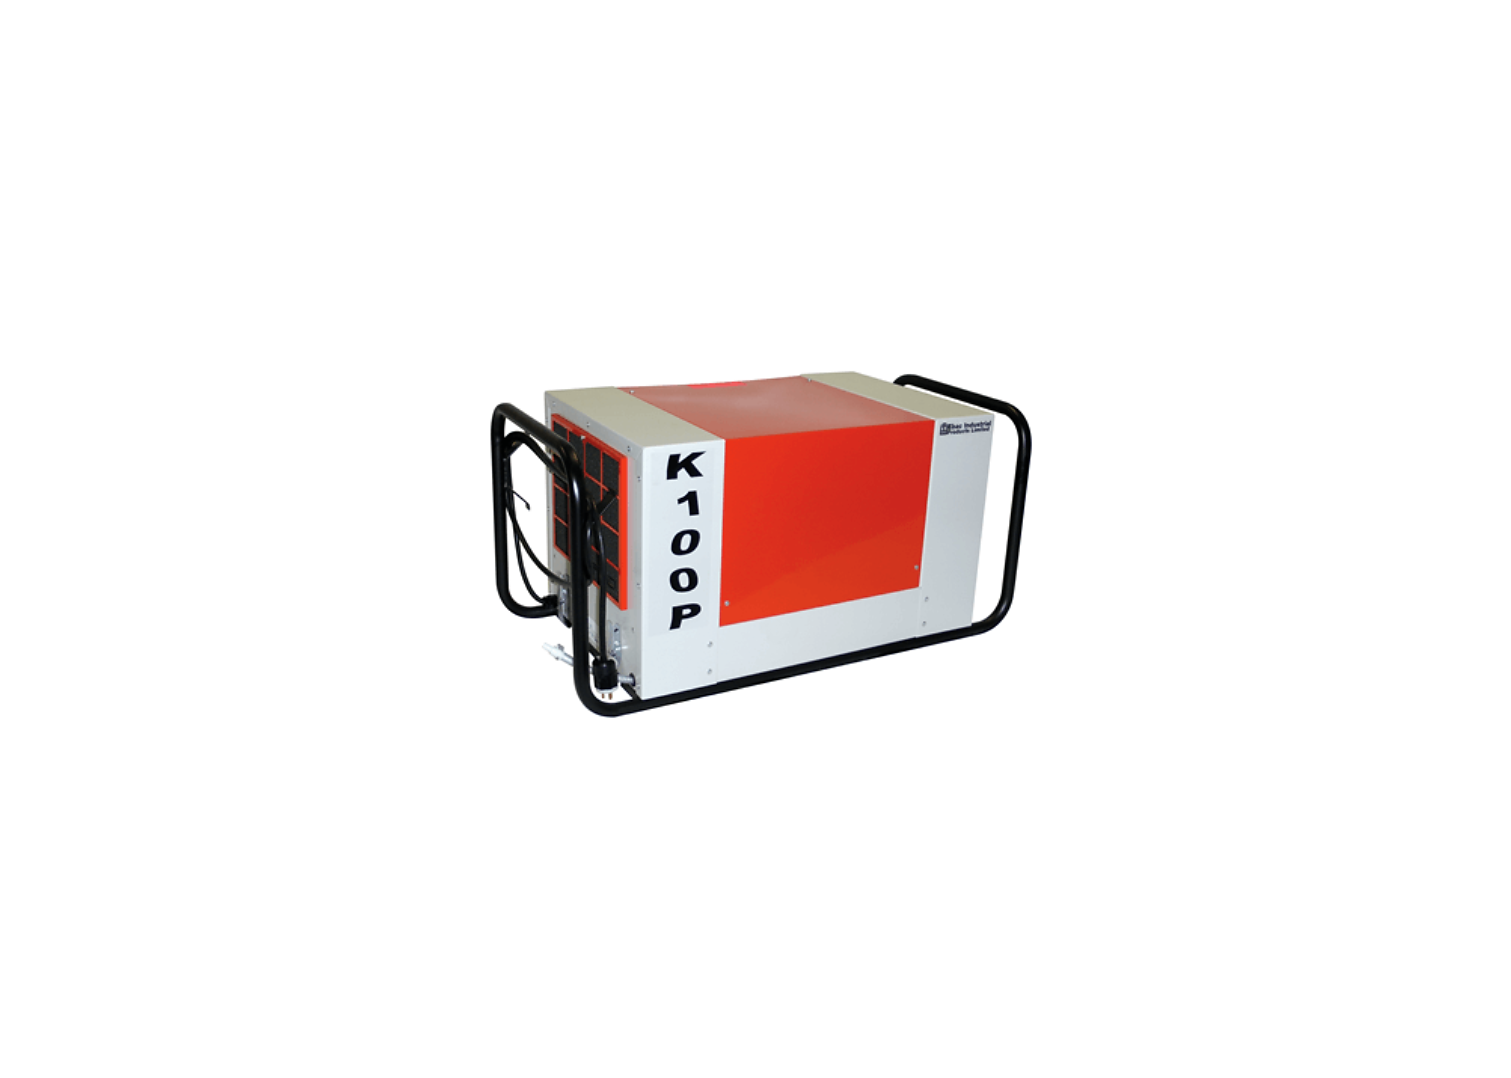 Ebac K100P Commercial Grade dehumidifier With Pump 3000 Sq. Ft.